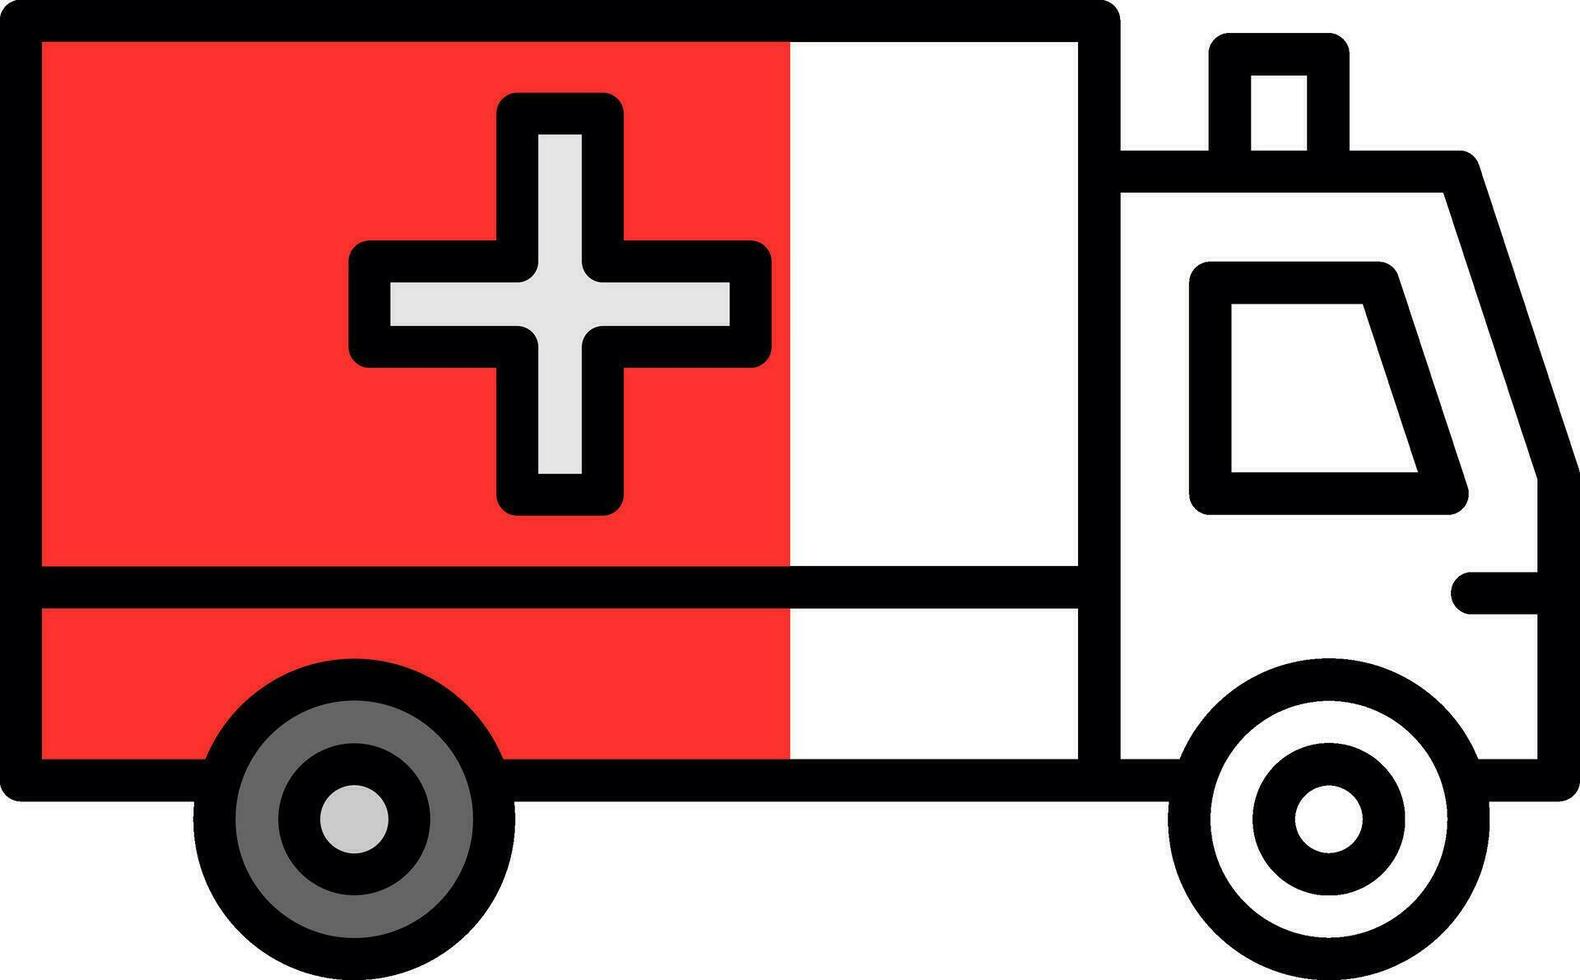 design de ícone de vetor de ambulância